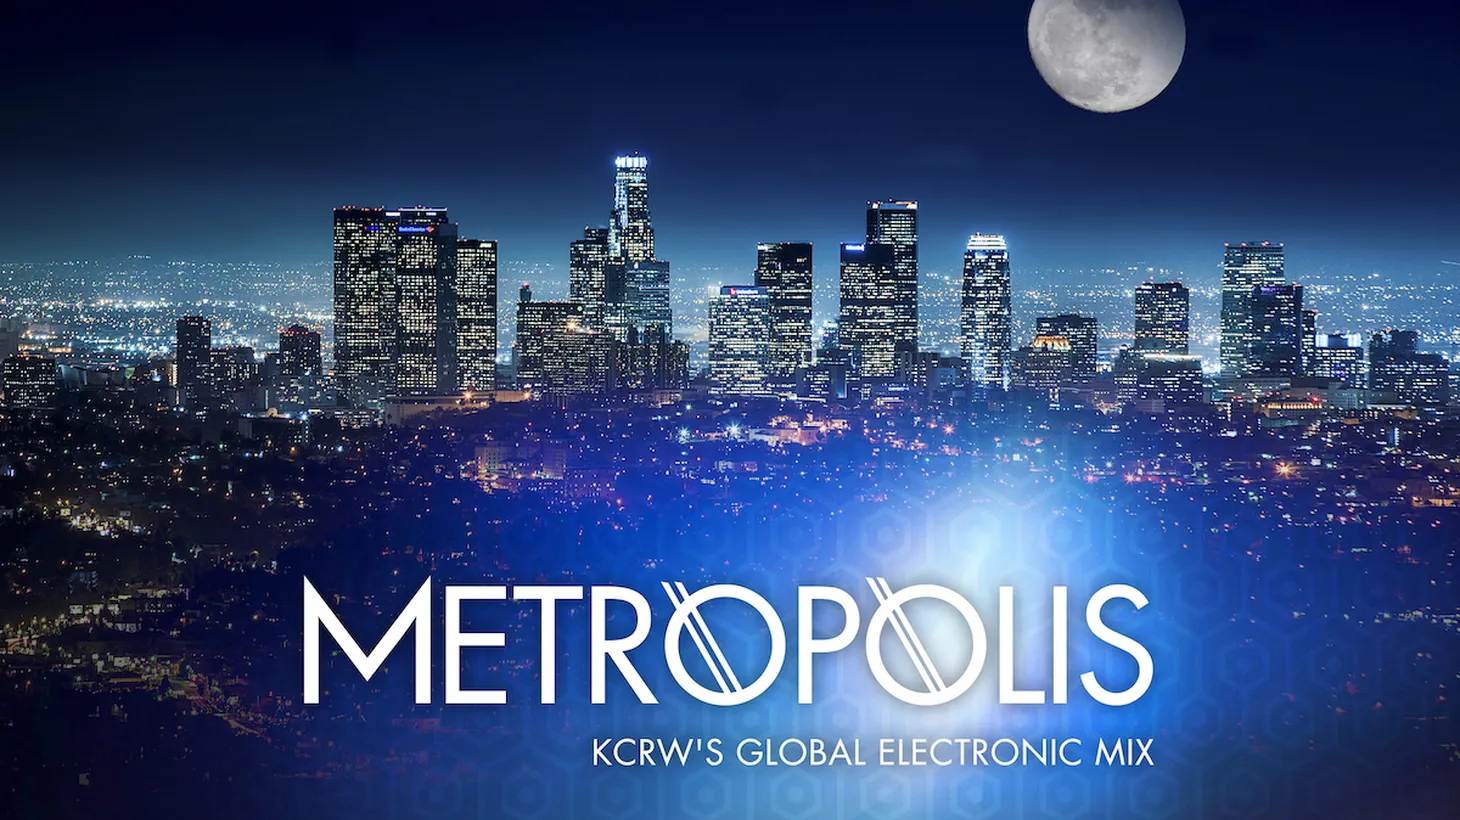 Metropolis playlist, October 23, 2021.